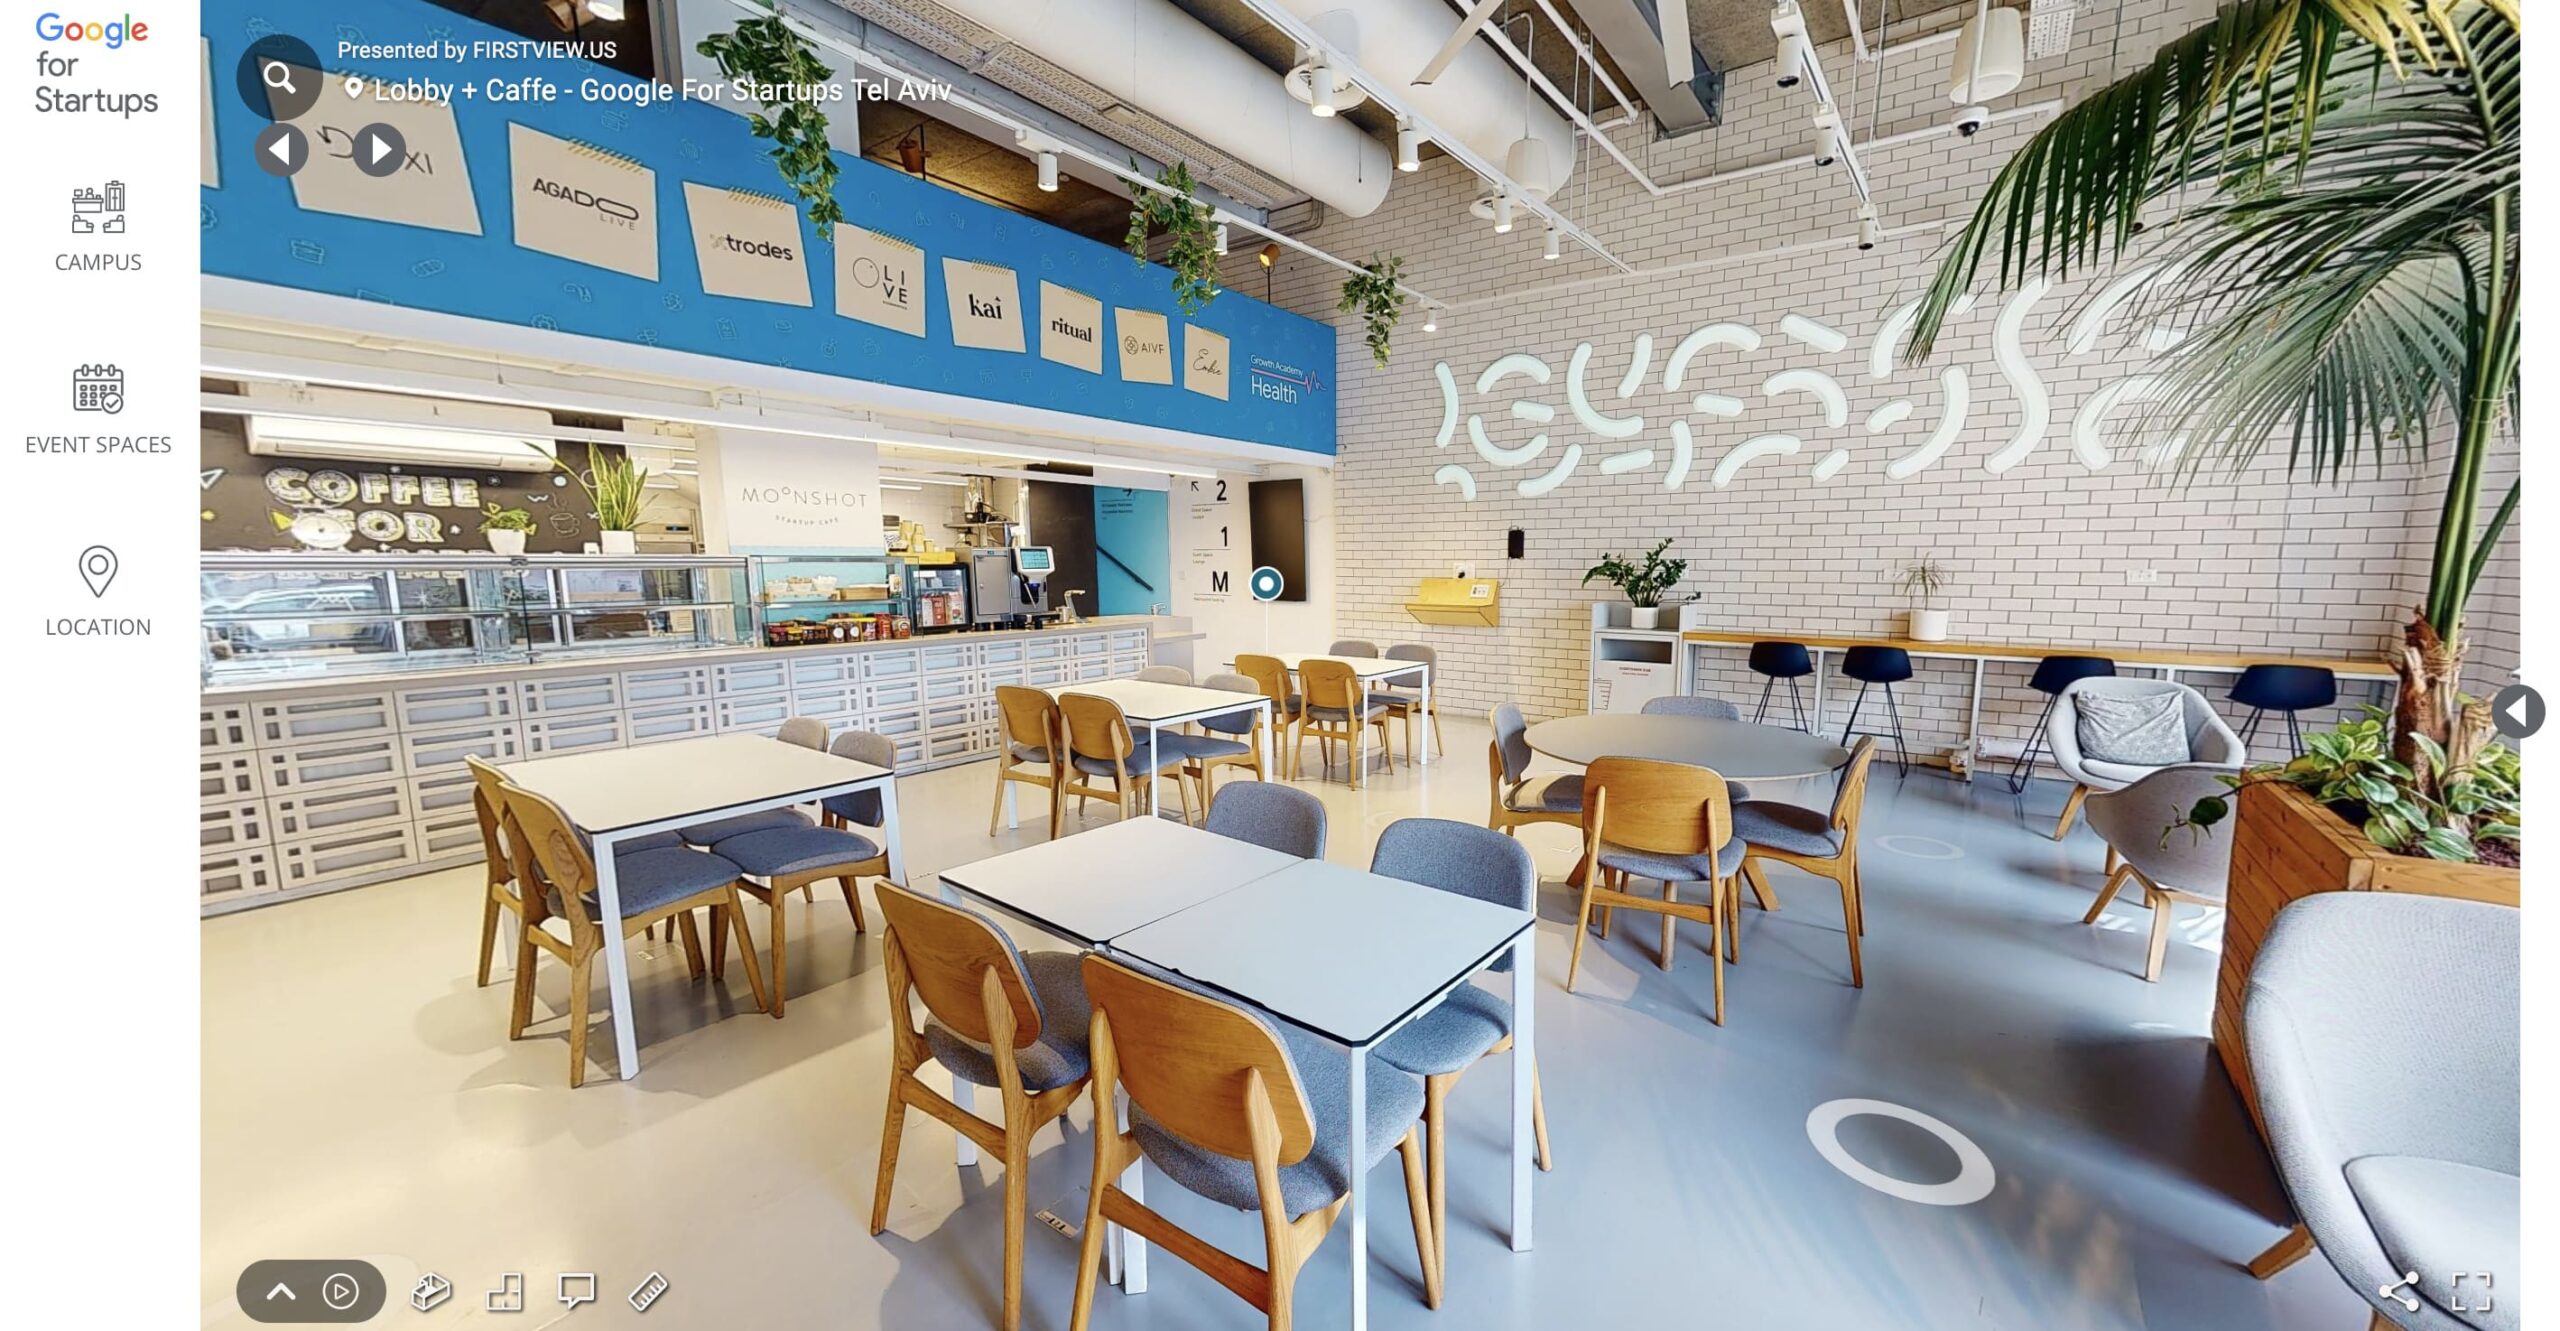 Google for Startups Tel Aviv Campus - Lobby and Café